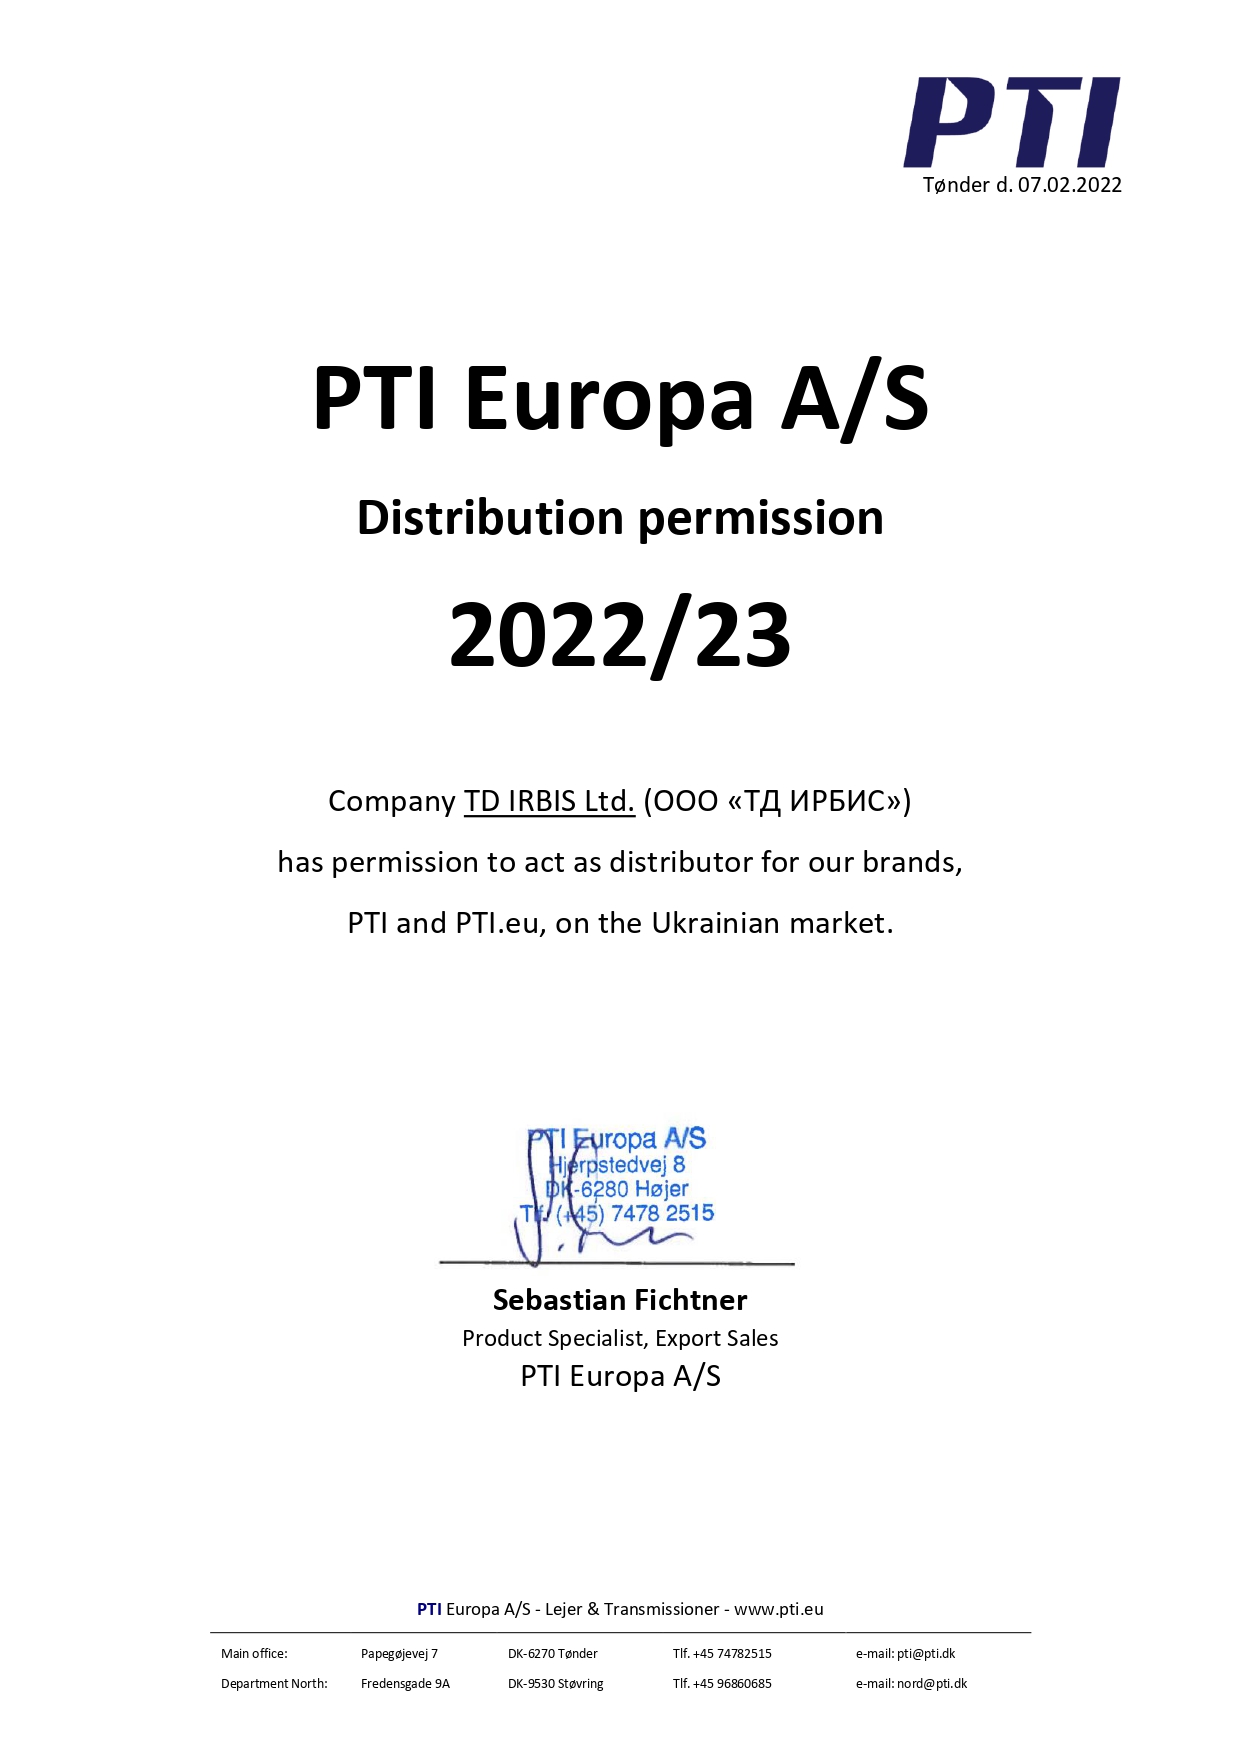 Сертификат дистрибуции PTI